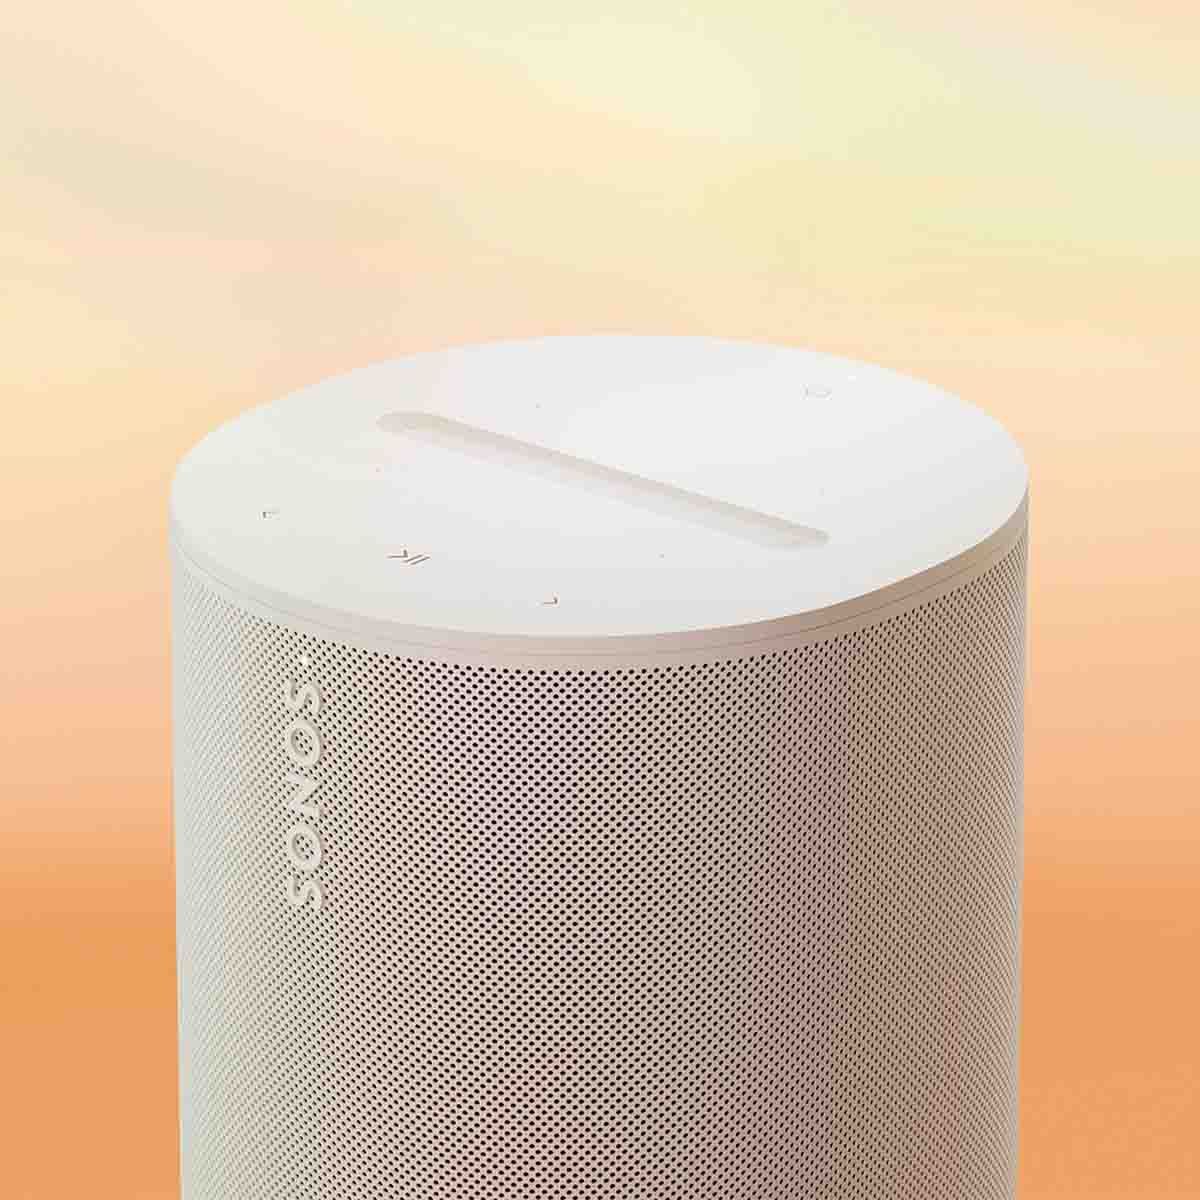 Sonos Era 100 Smart Speaker - White - angled top right view on tie-die background